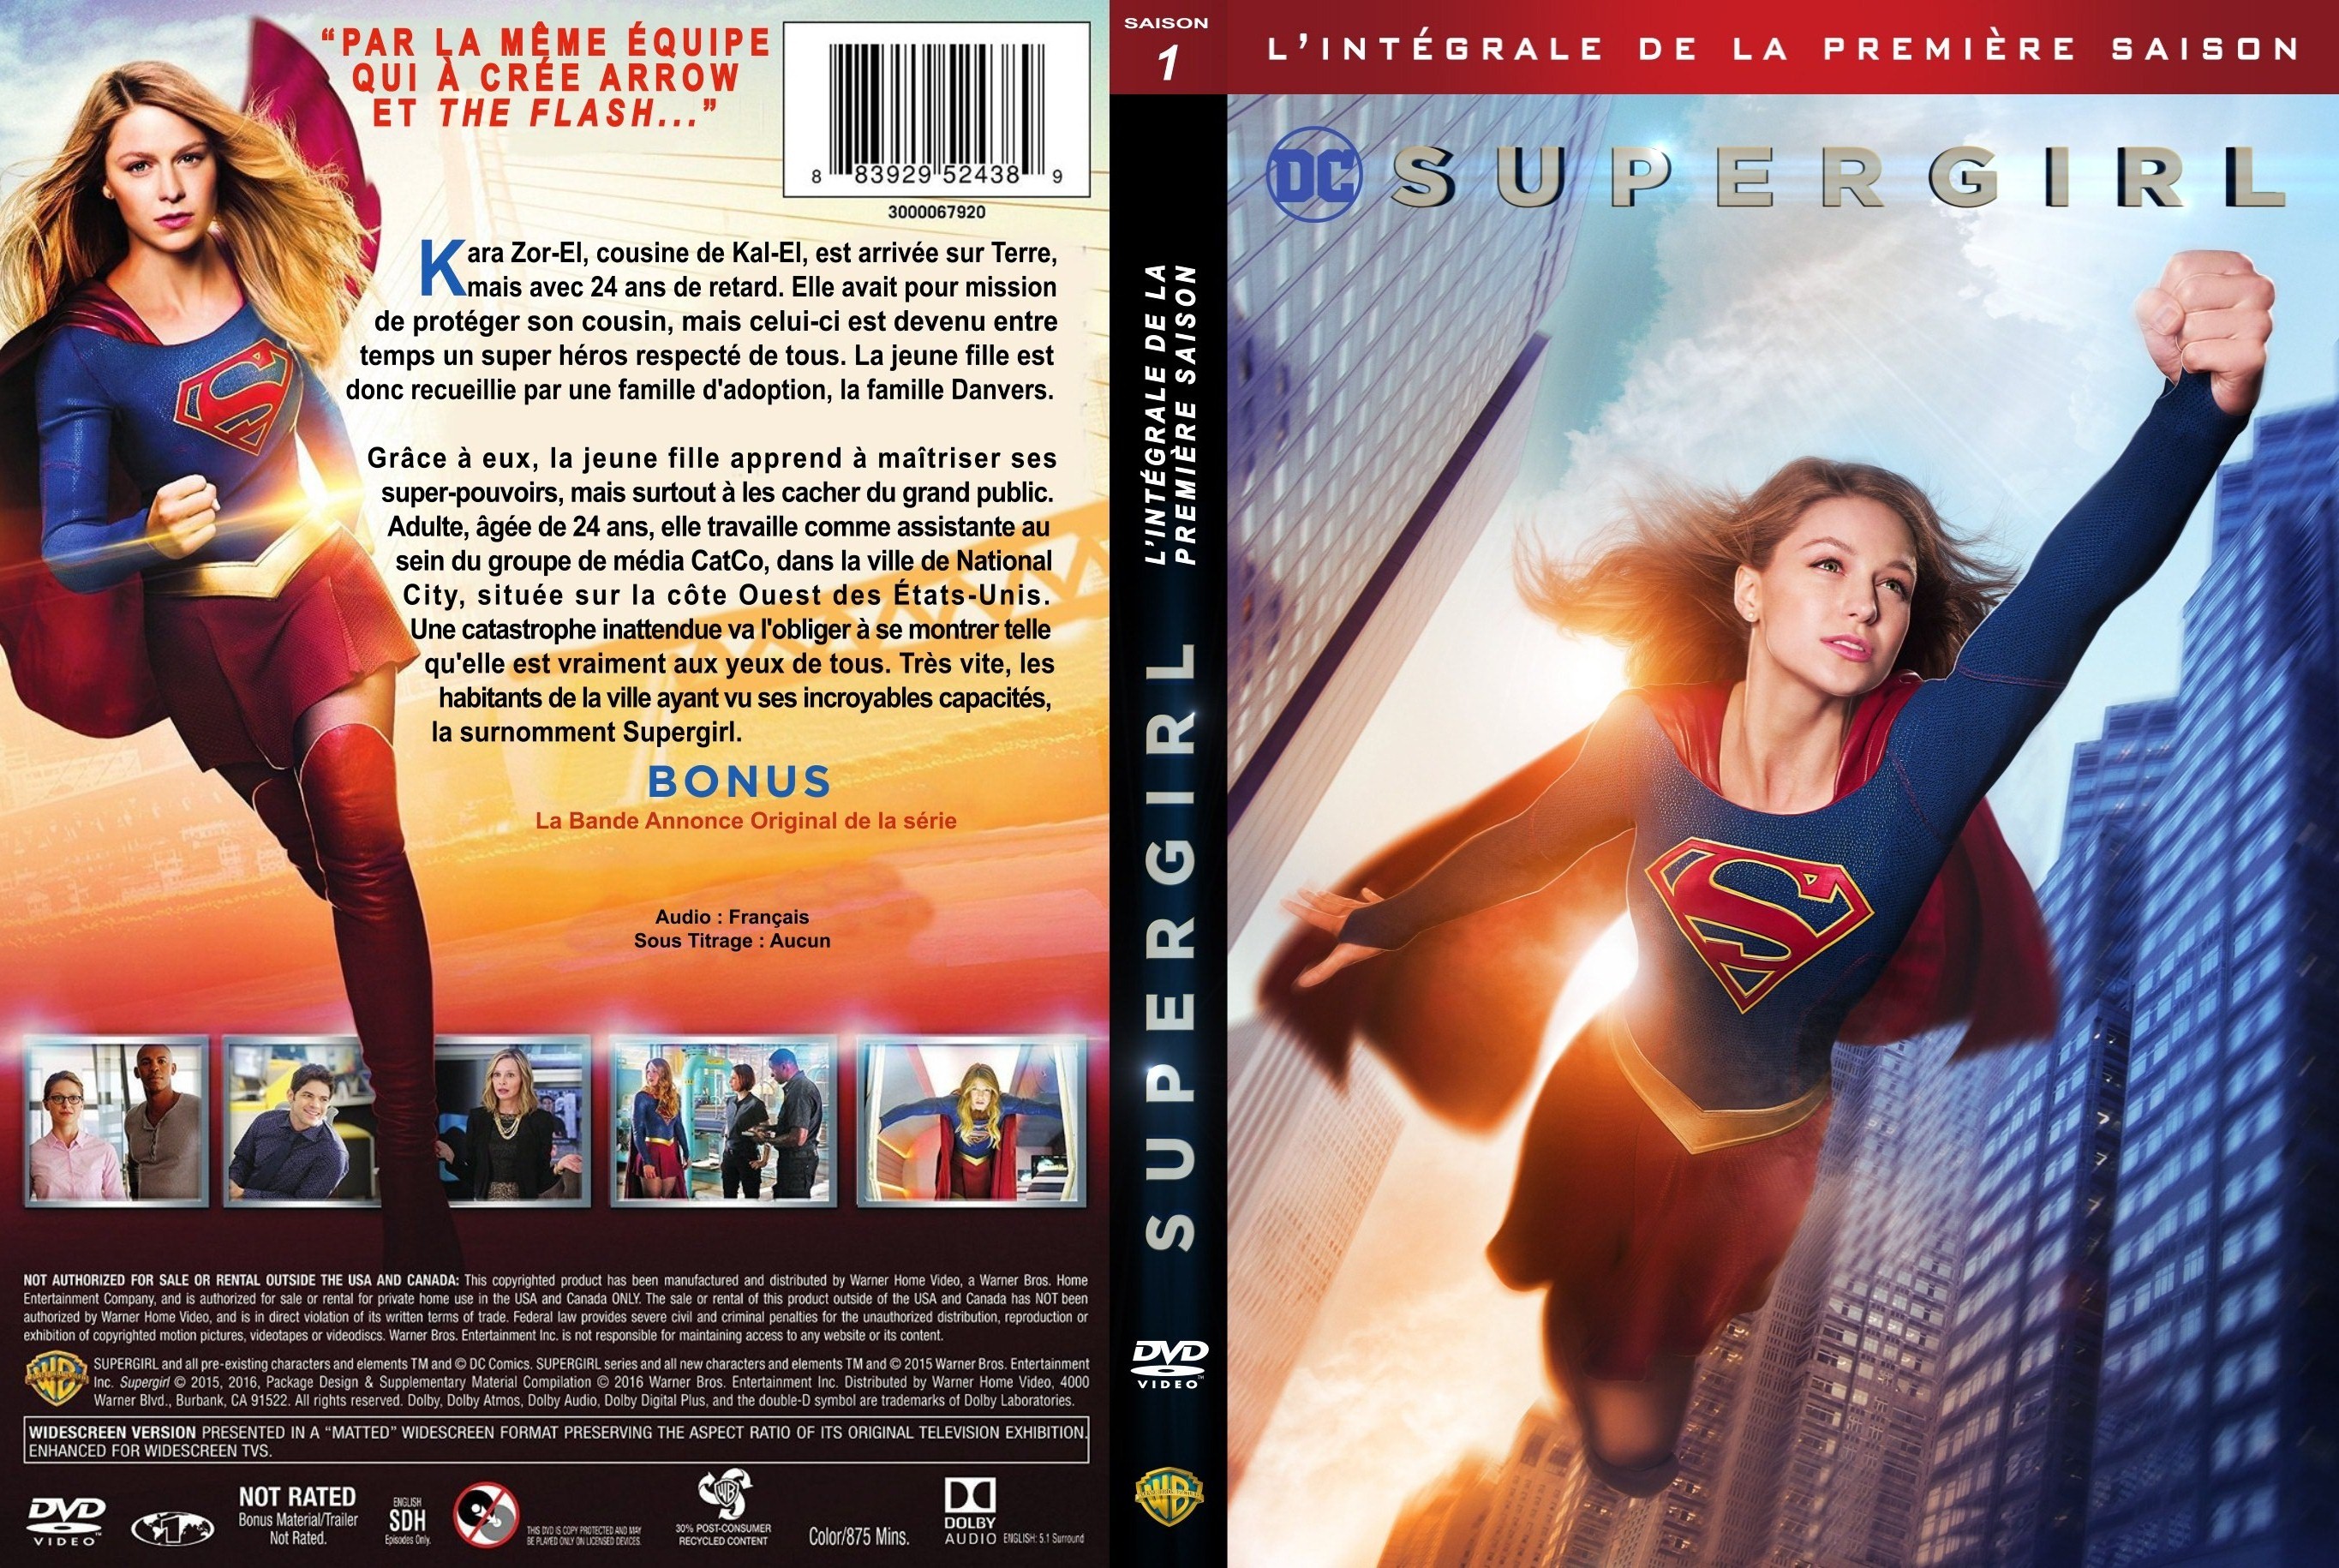 Jaquette DVD Supergirl saison 1 custom